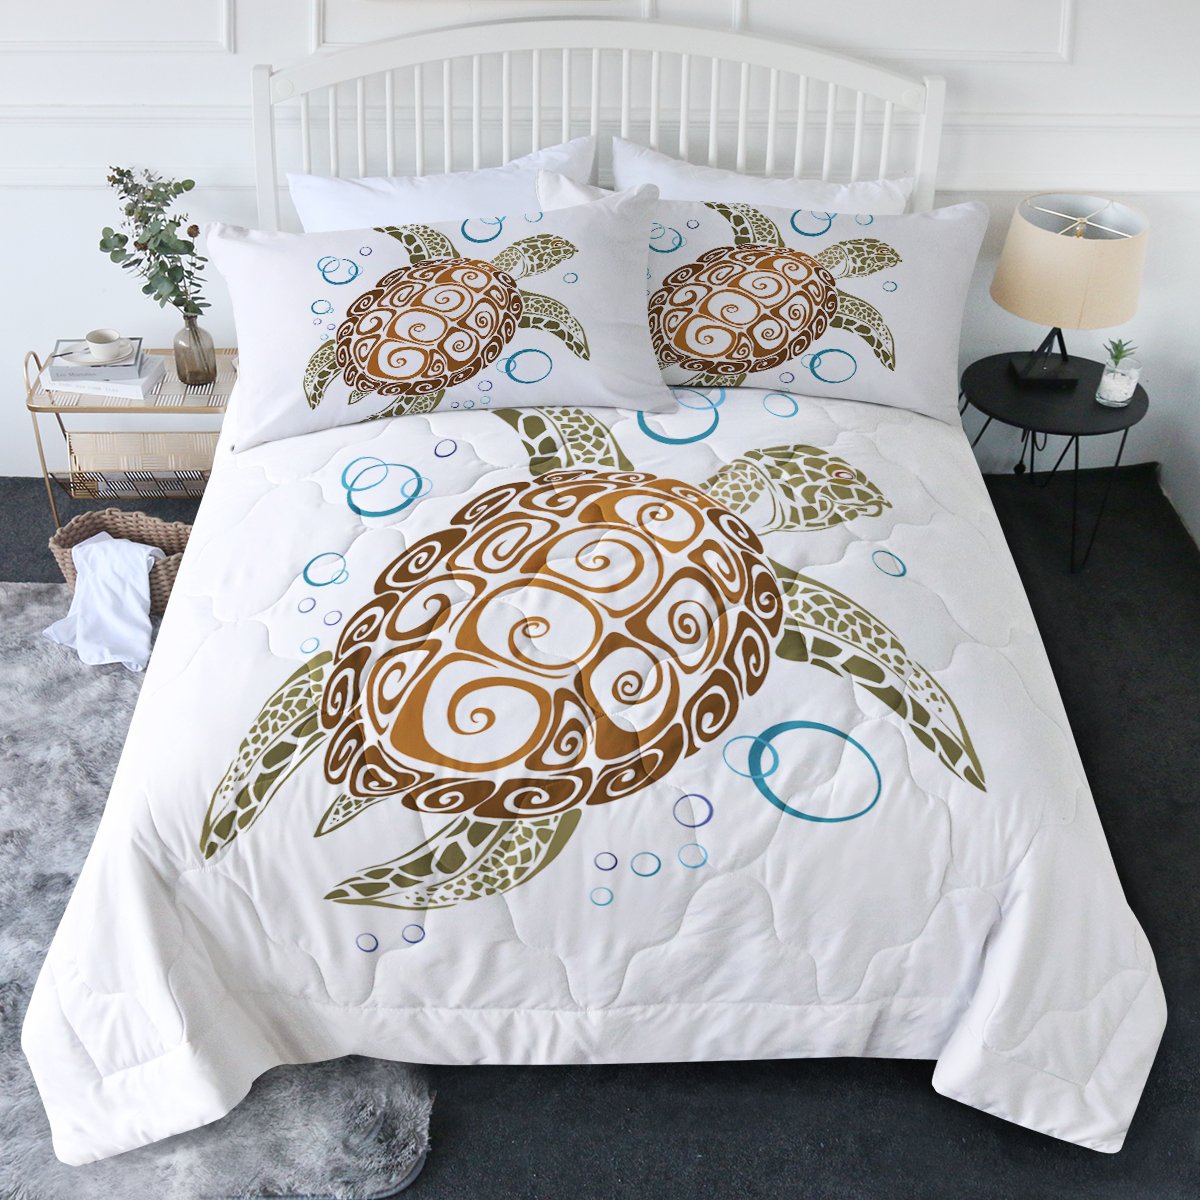 The Great Sea Turtle Comforter Set